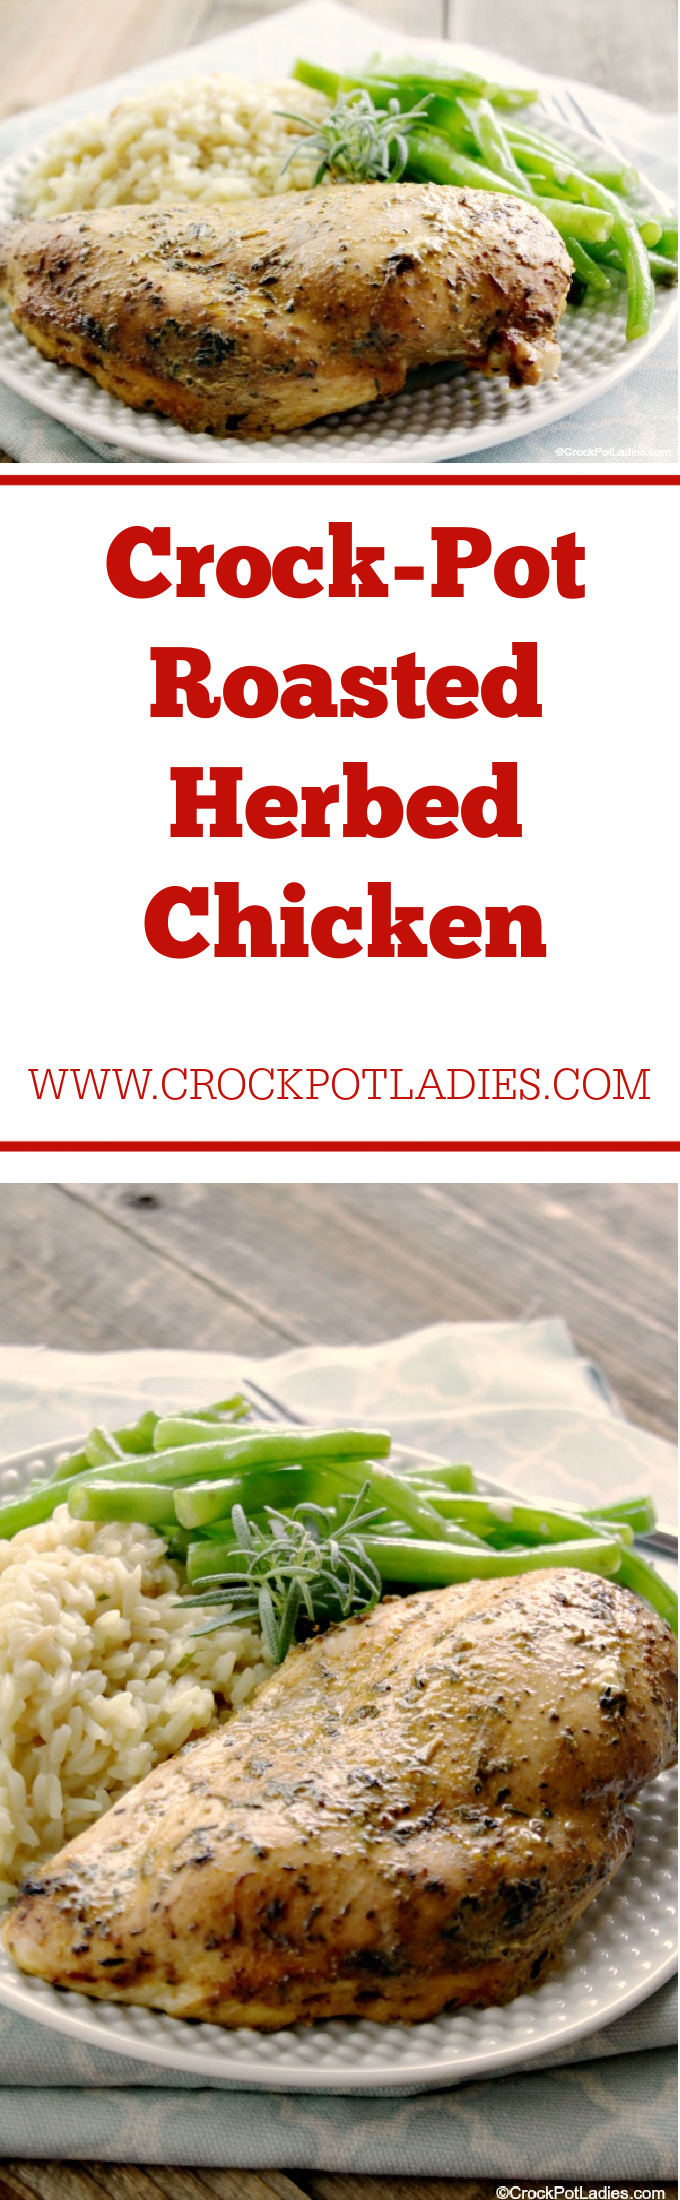 Crock-Pot Roasted Herbed Chicken